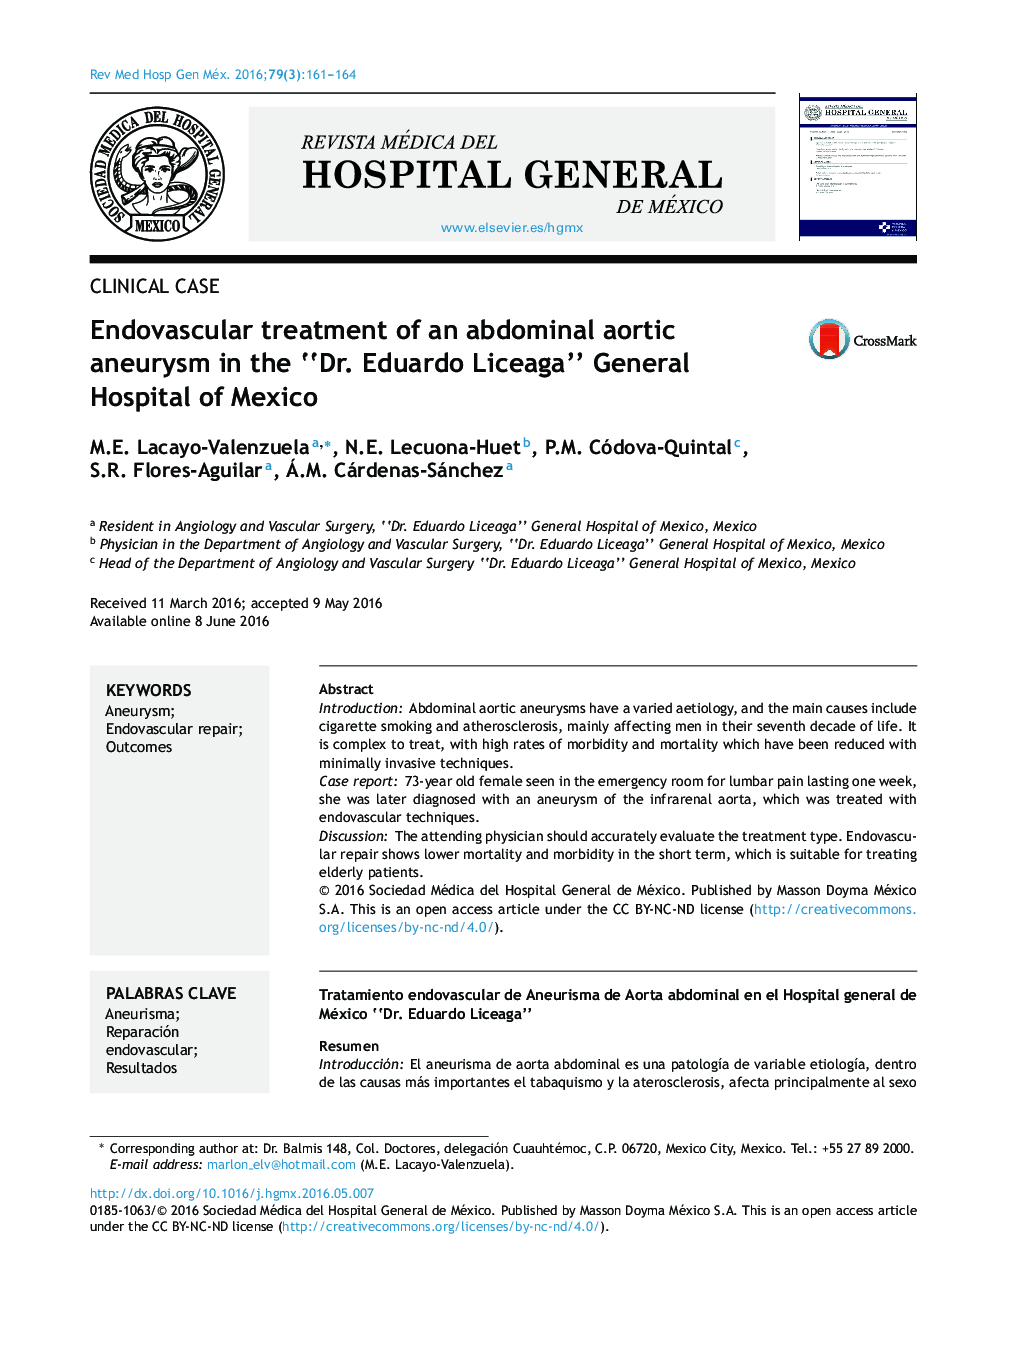 Endovascular treatment of an abdominal aortic aneurysm in the “Dr. Eduardo Liceaga” General Hospital of Mexico